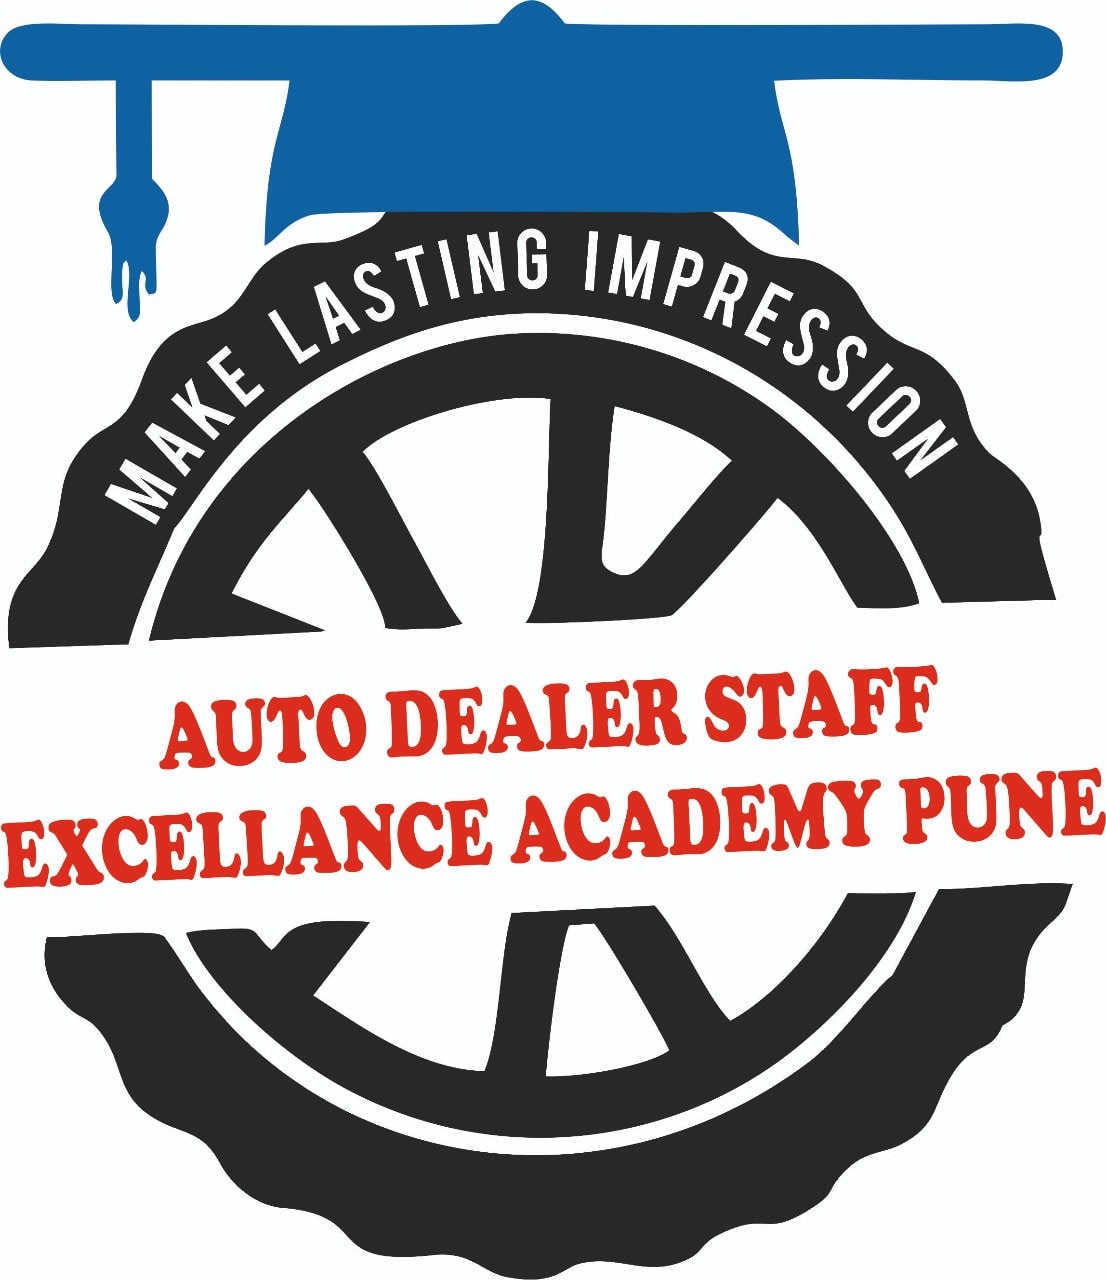 Auto Dealer Staff Excellence Academy